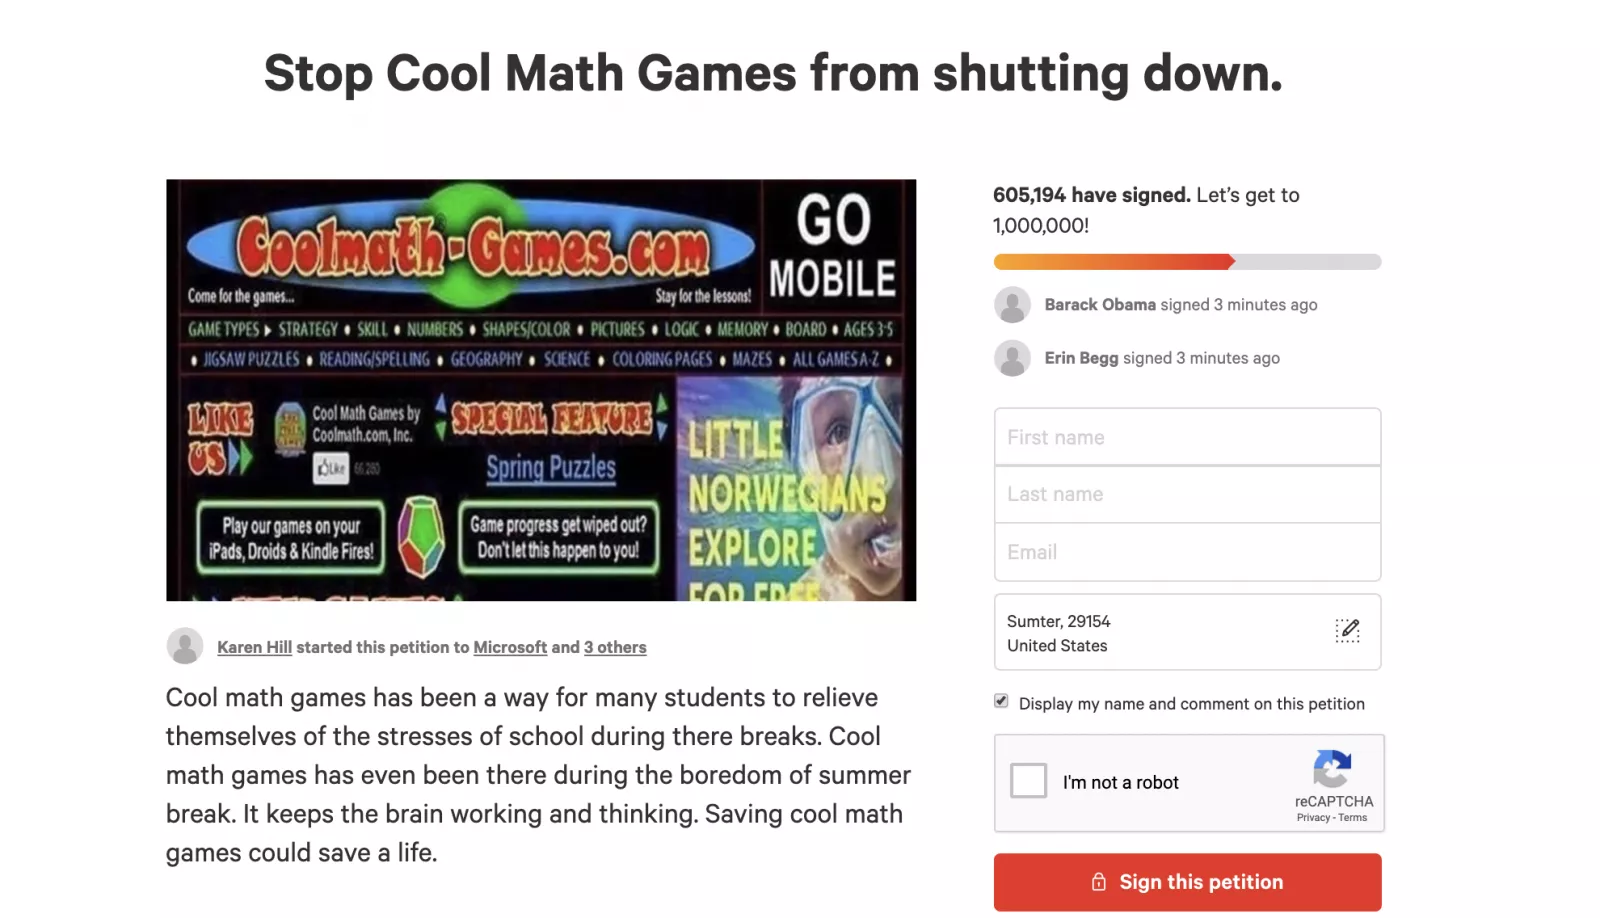 Is Cool Math Games Shutting Down